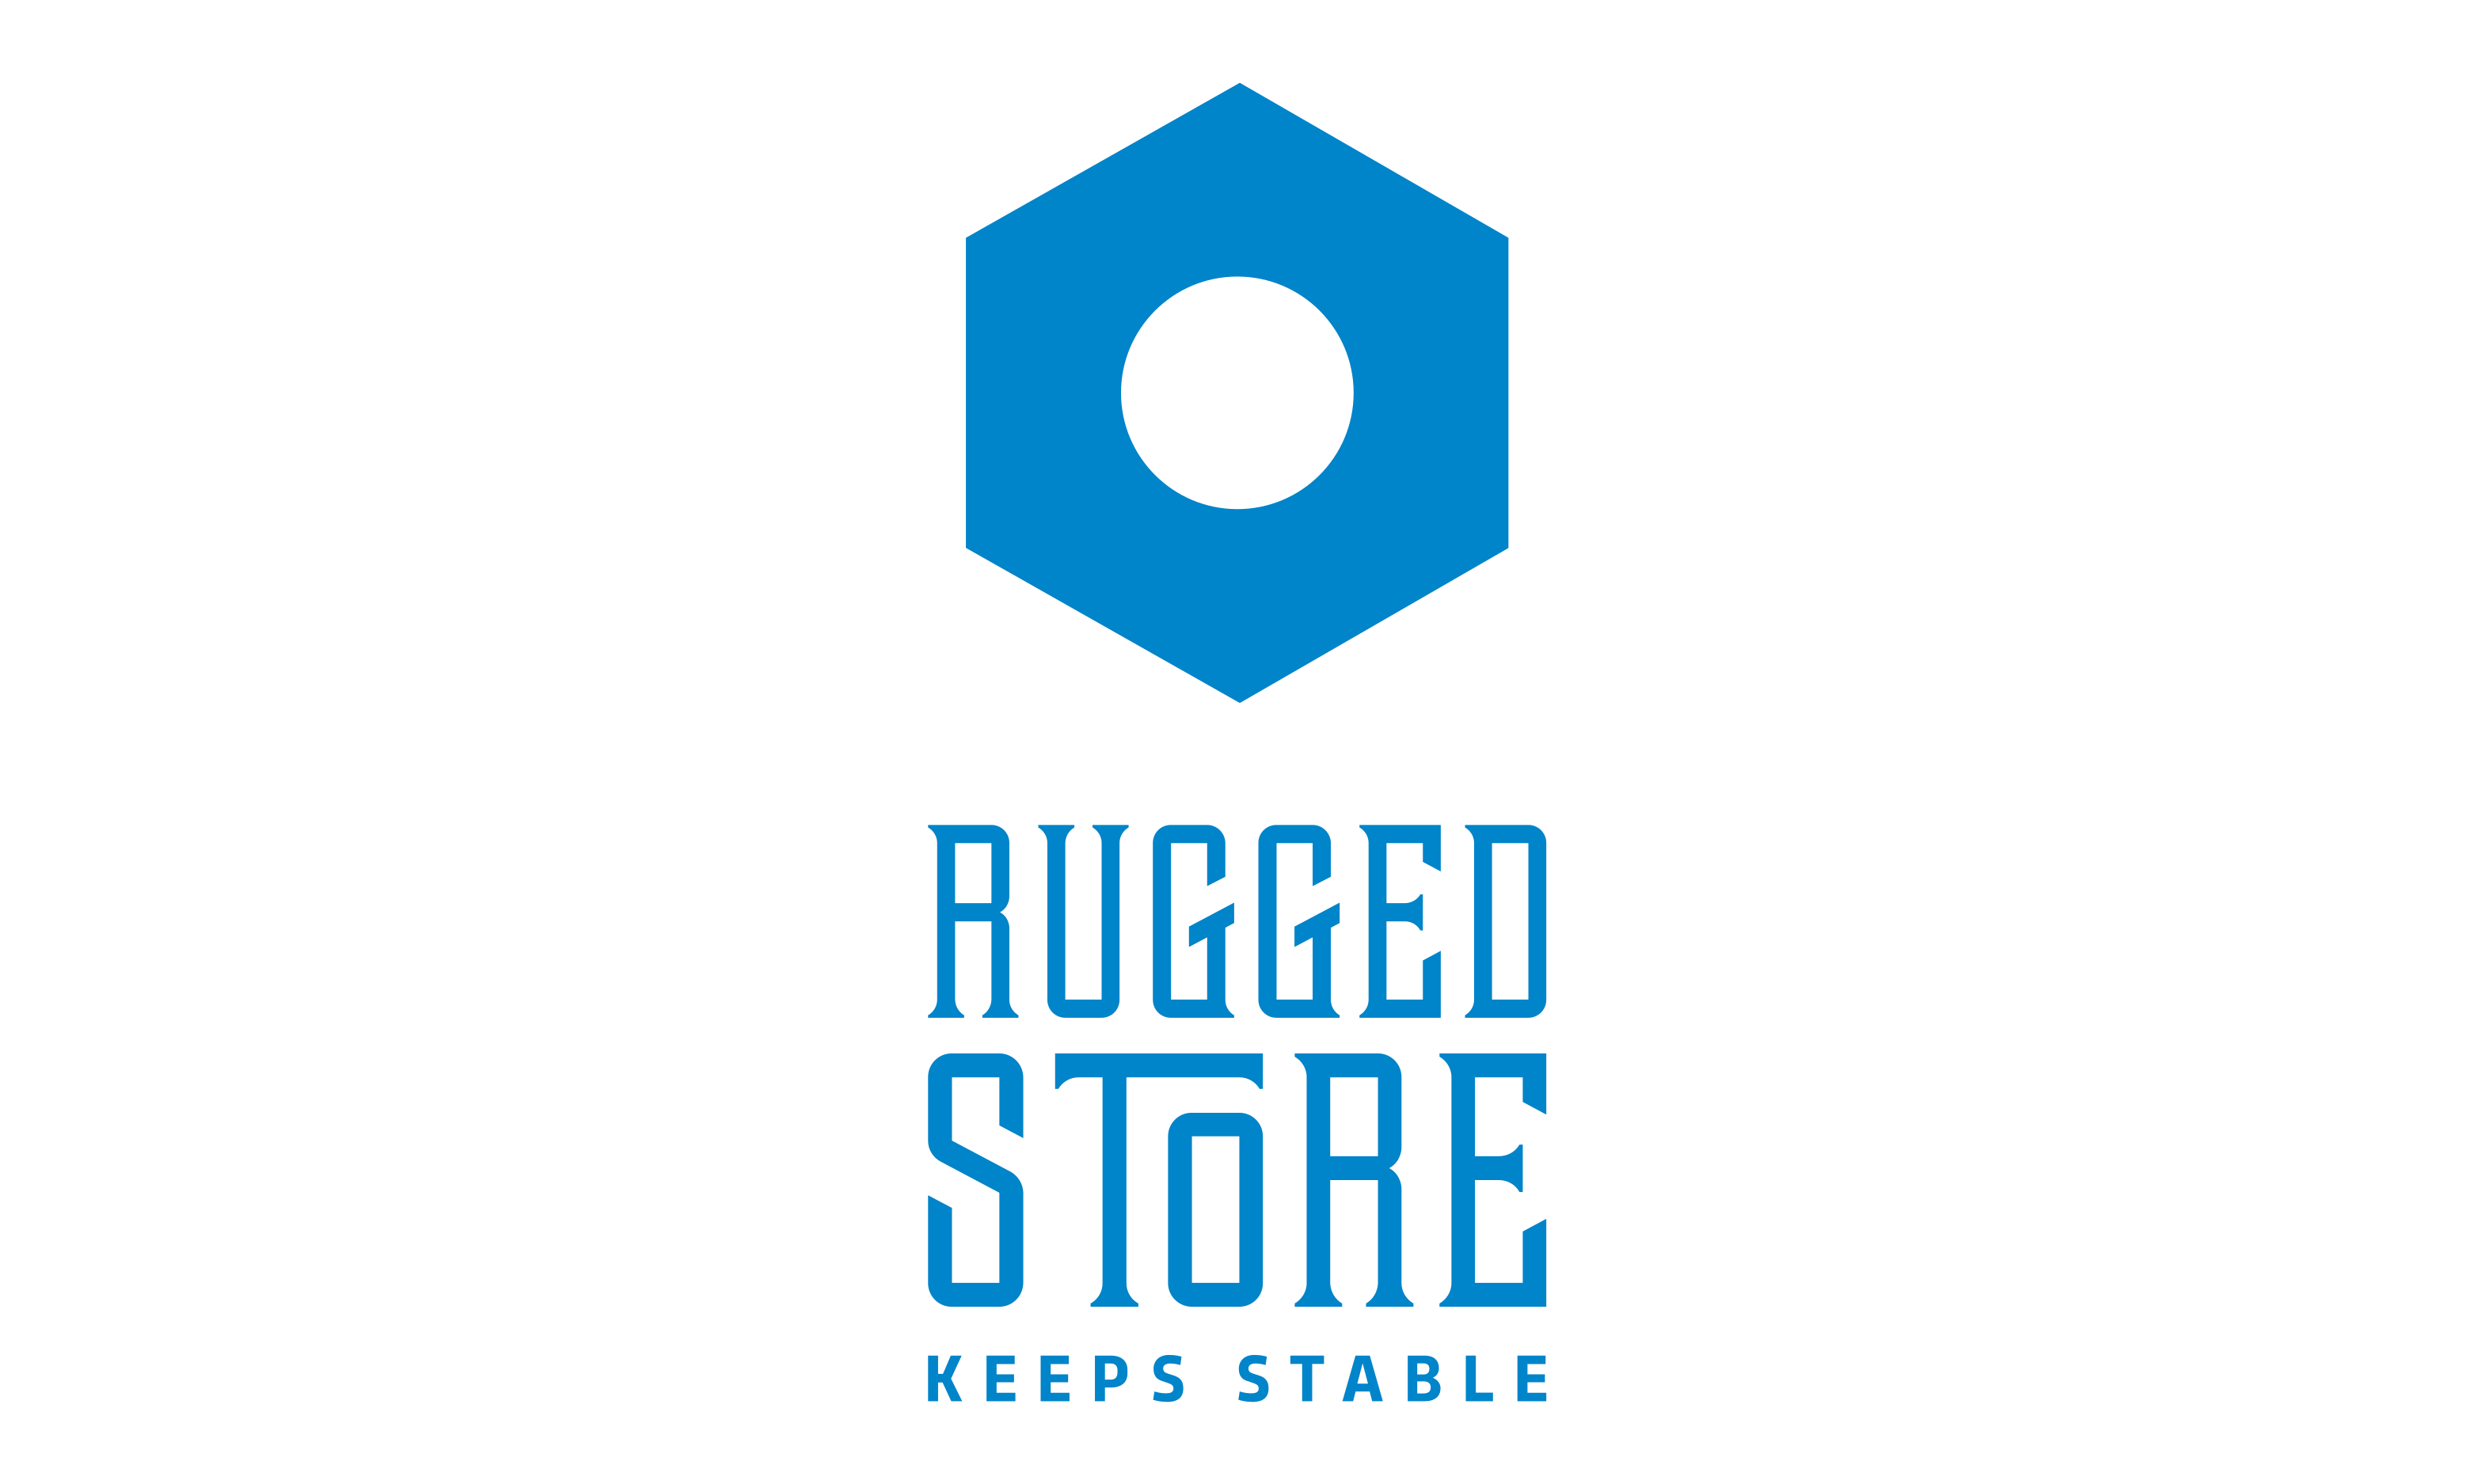 RuggedStore.com: Unser neuer Shop ist online